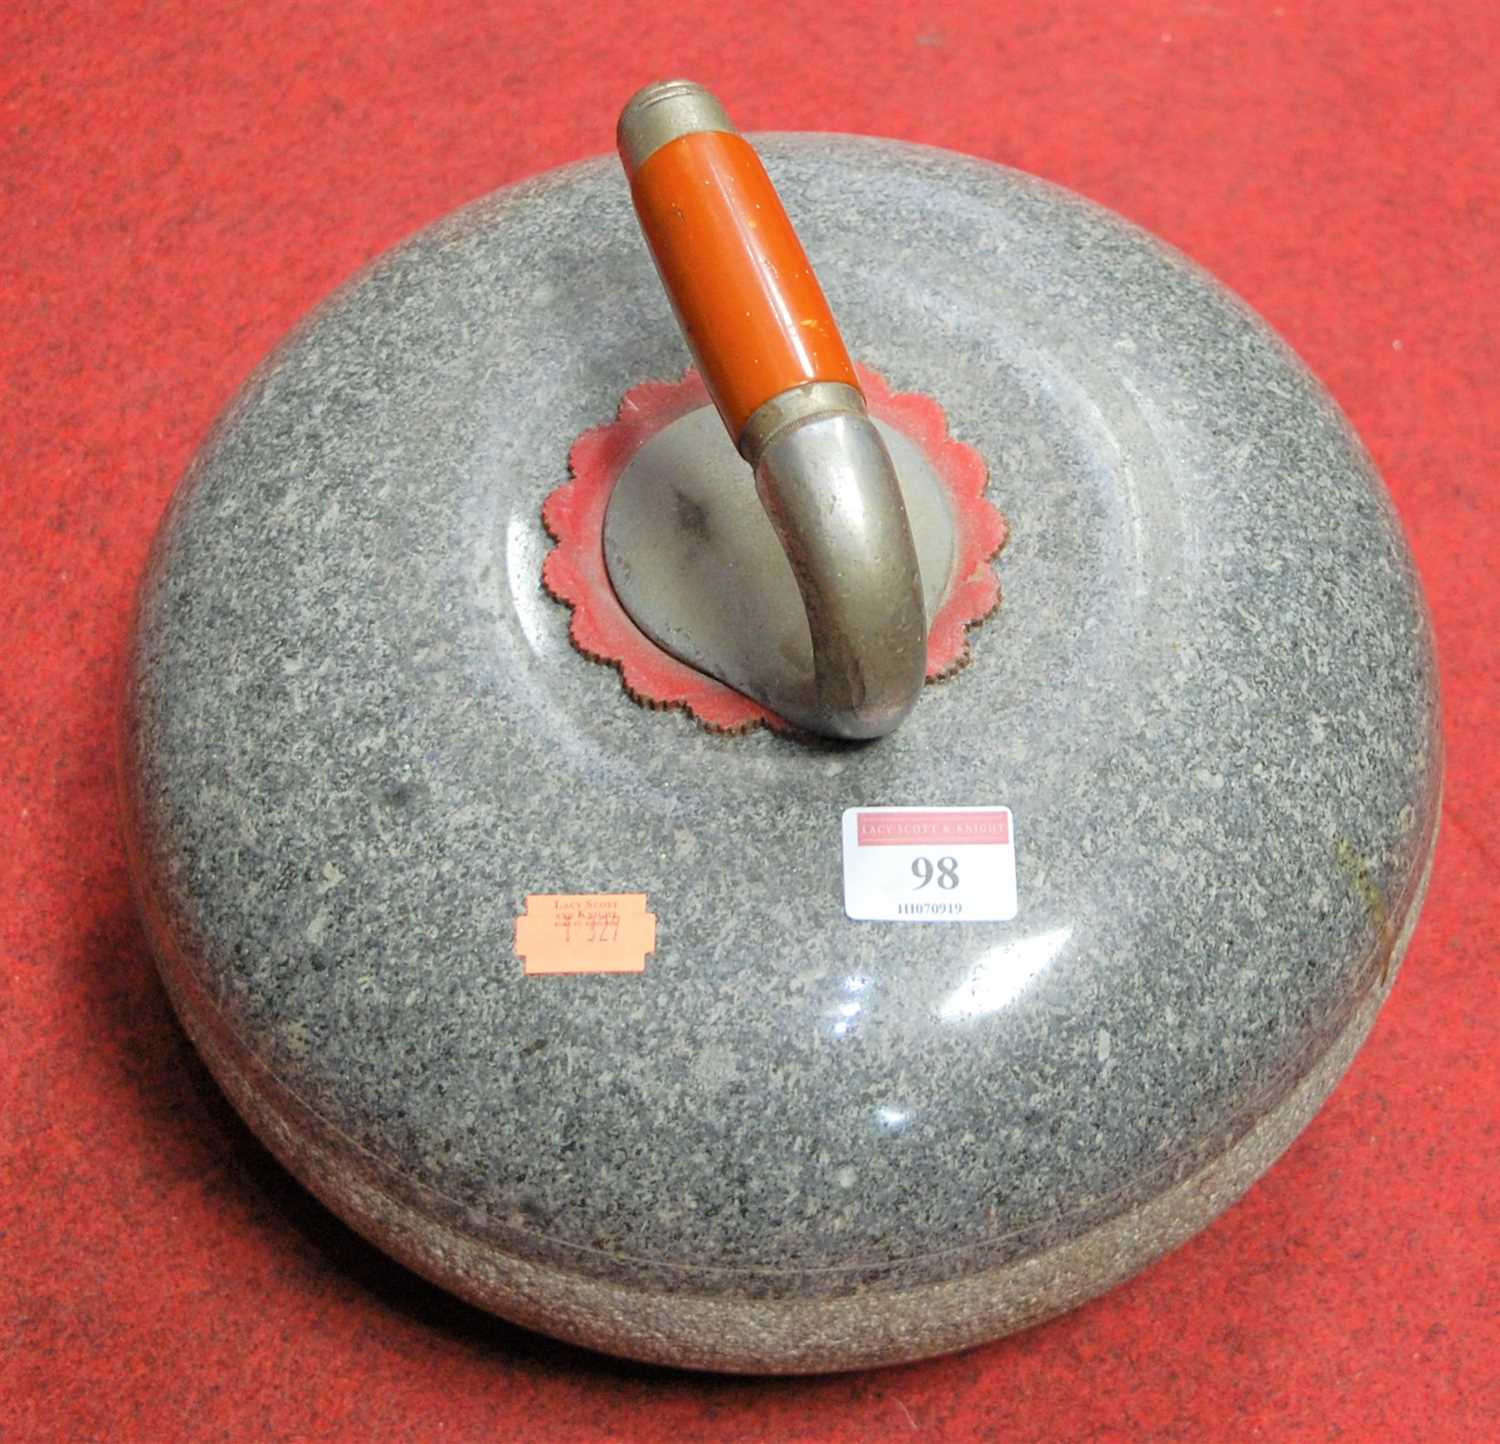 Lot 98 - A single curling stone